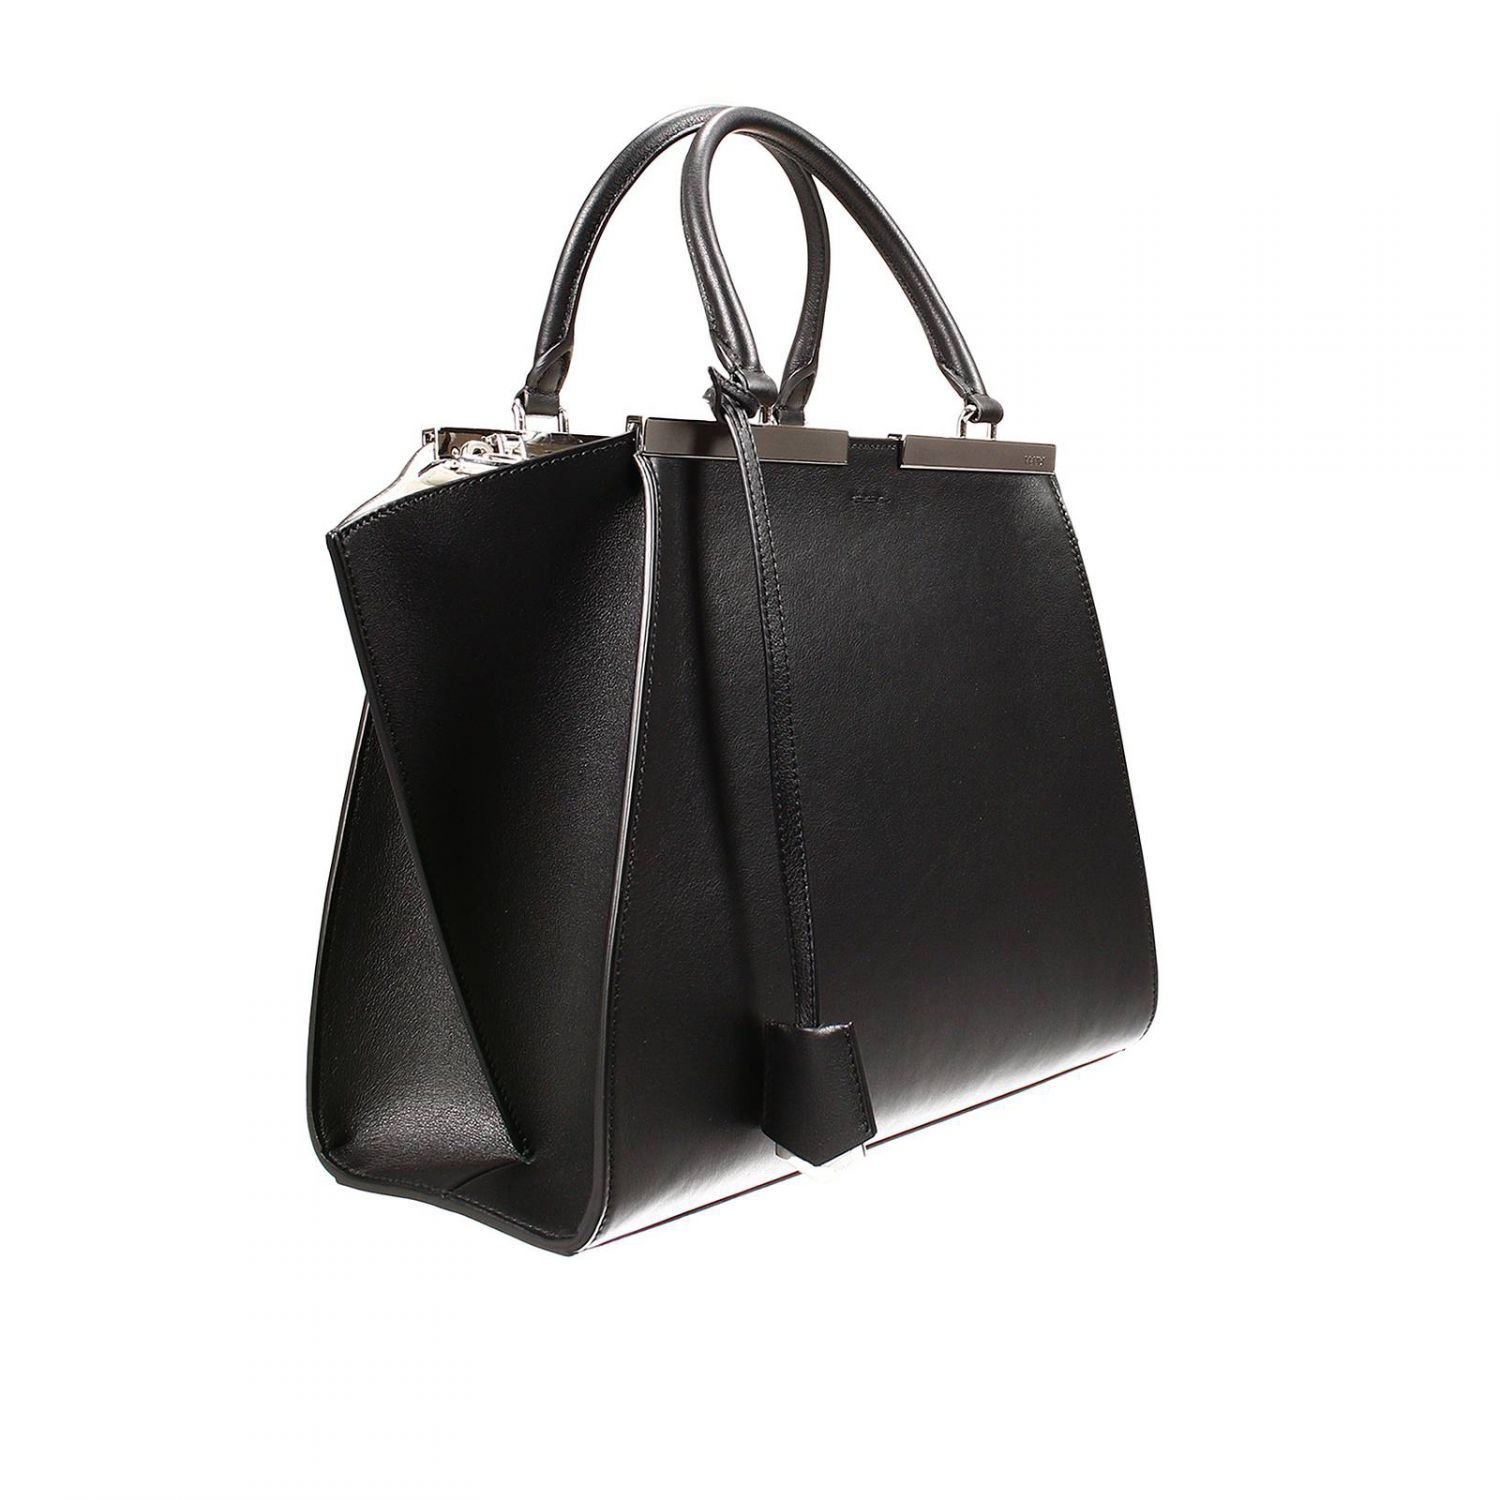 Fendi Handbag Black And White | semashow.com